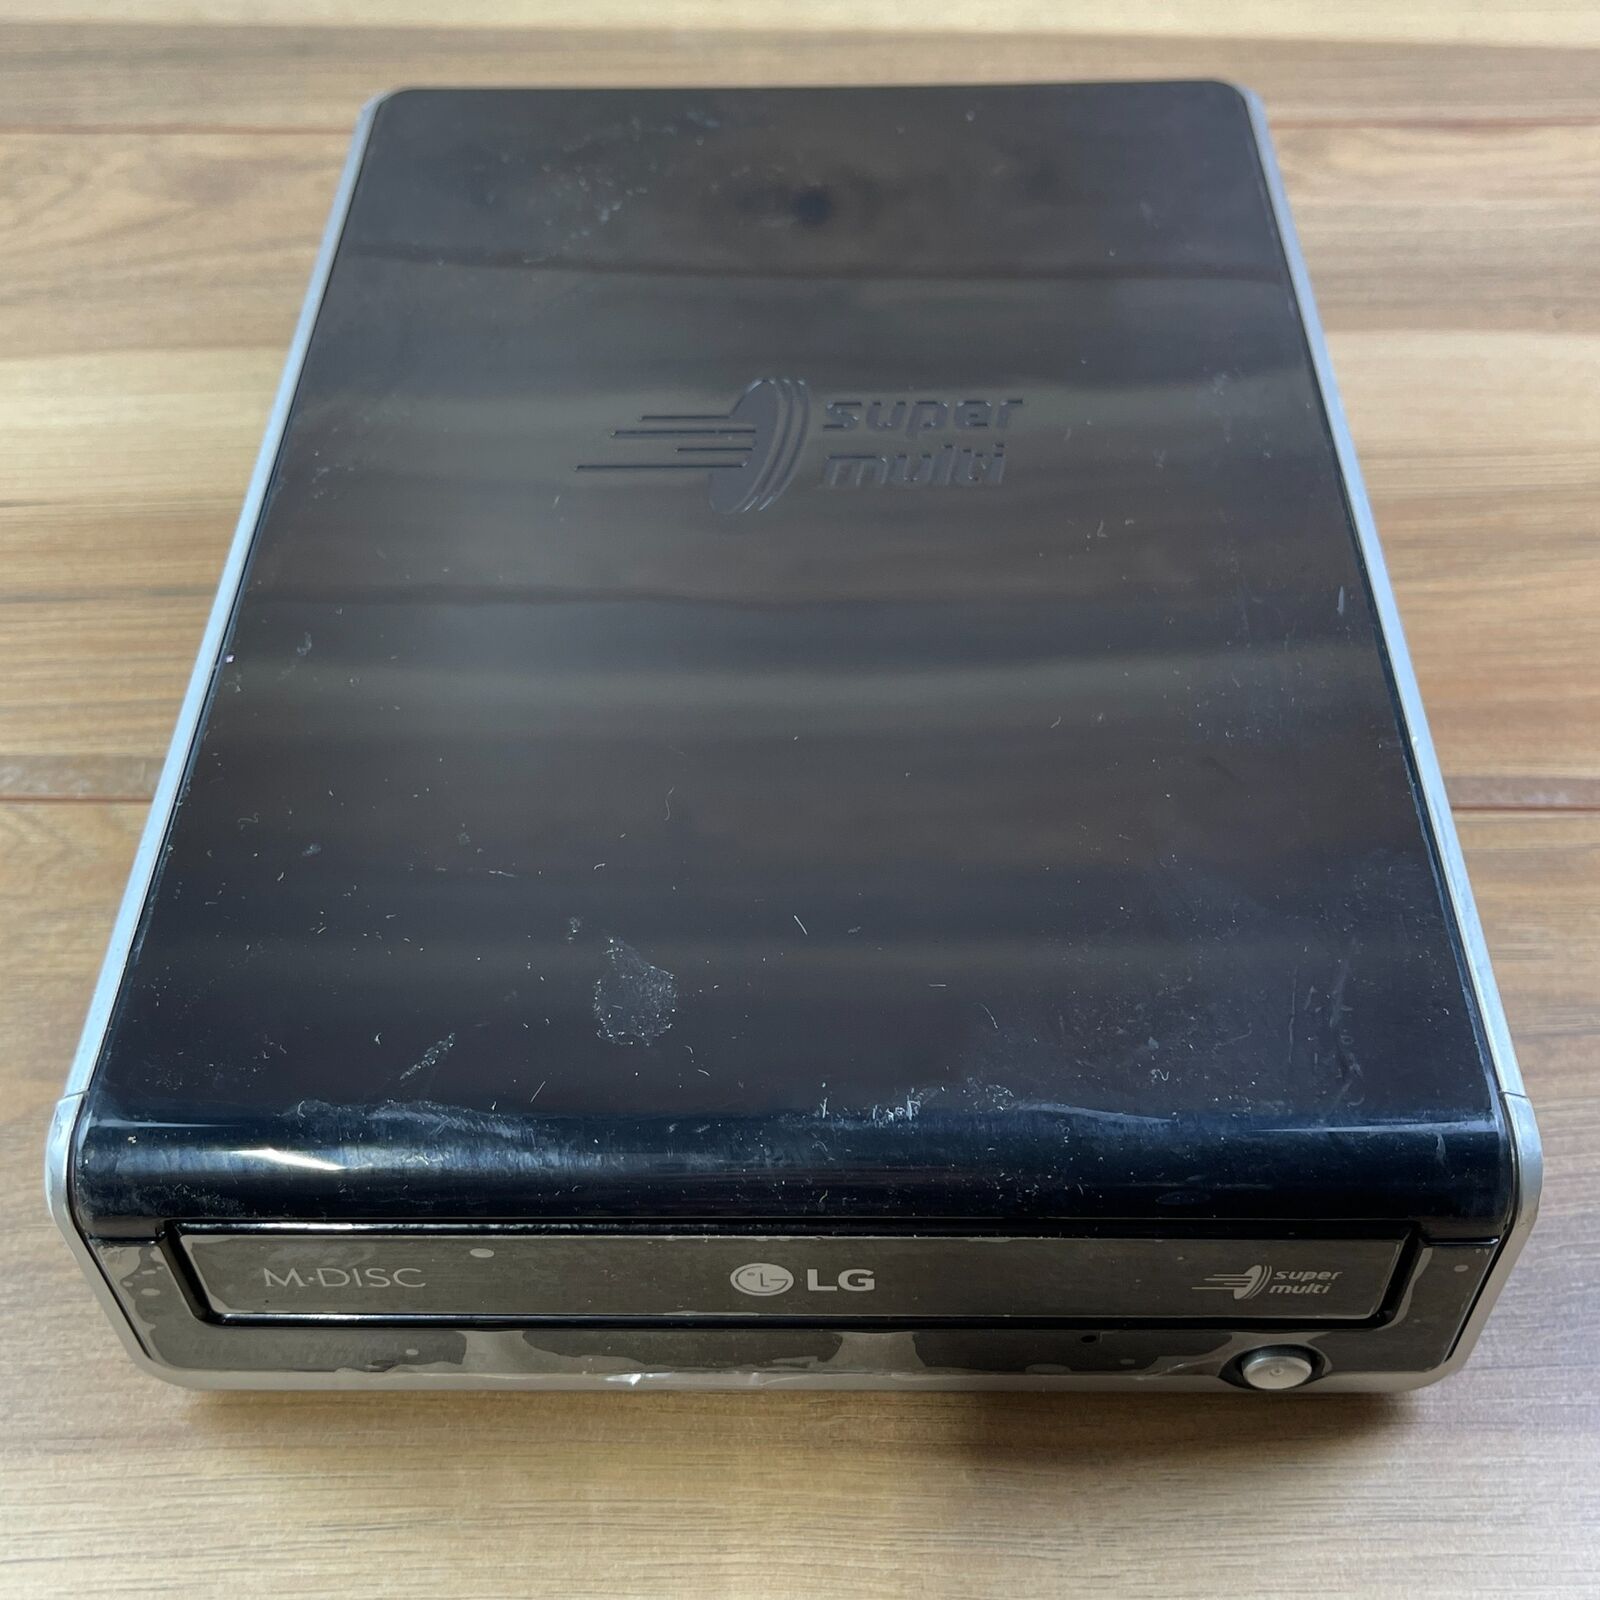 LG Super Multi GE24NU40 Black Portable Disc Support External 24x DVD Rewriter